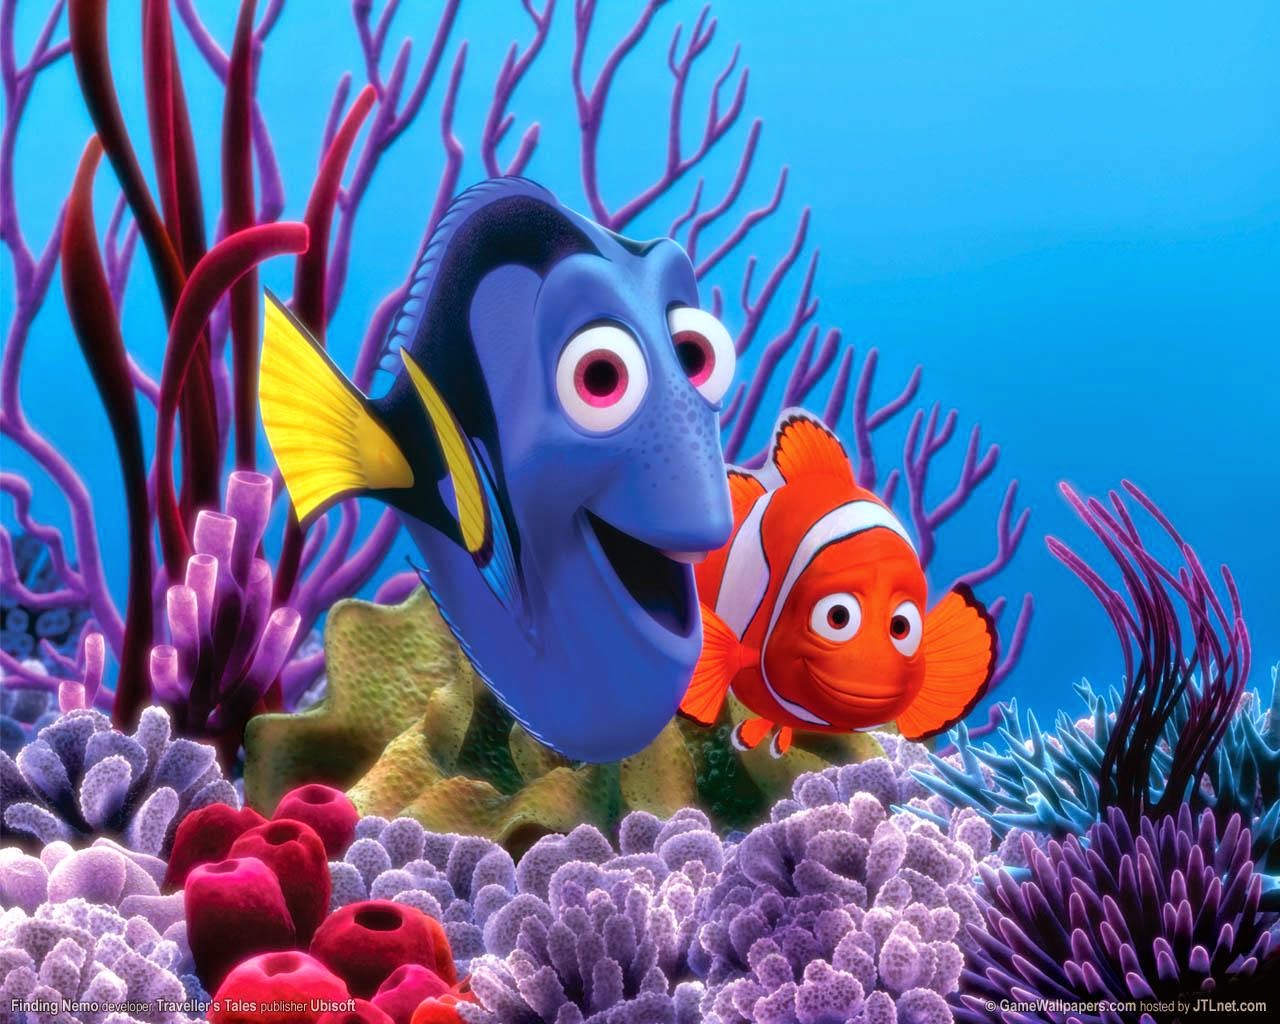 Kumpulan Gambar Finding Nemo Gambar Lucu Terbaru Cartoon 